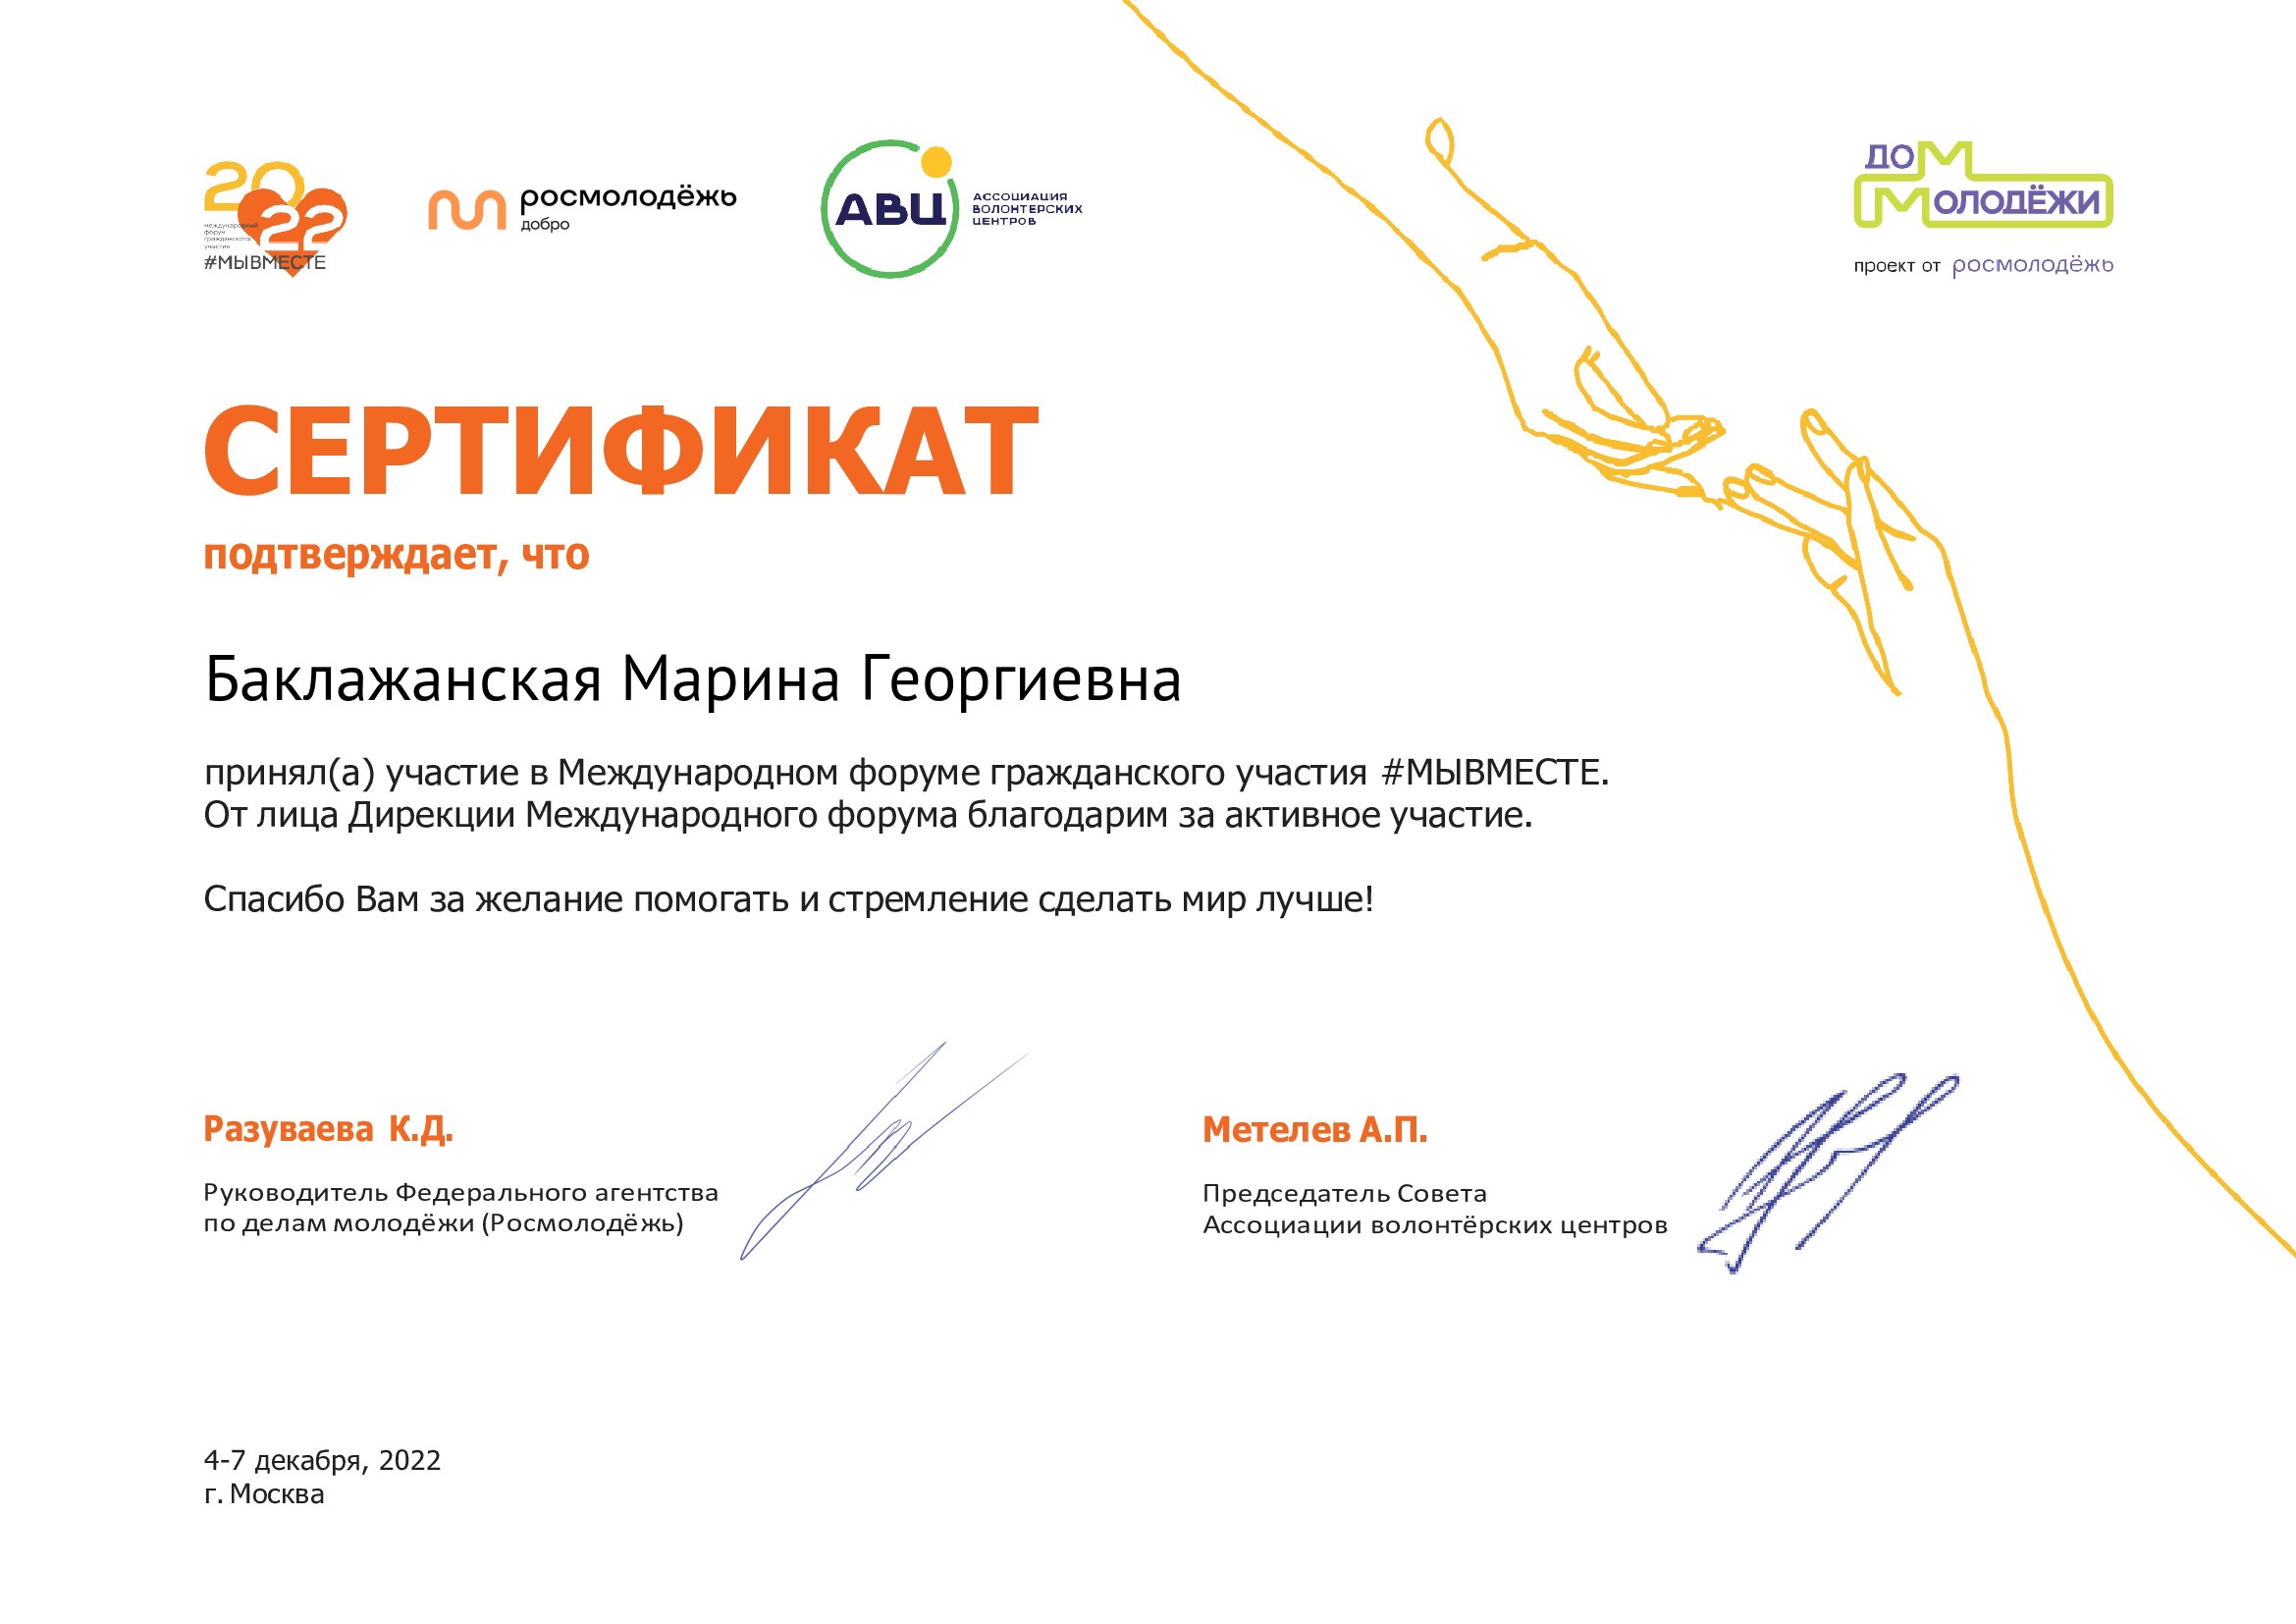 Сертификат участника МФГУ - 2022